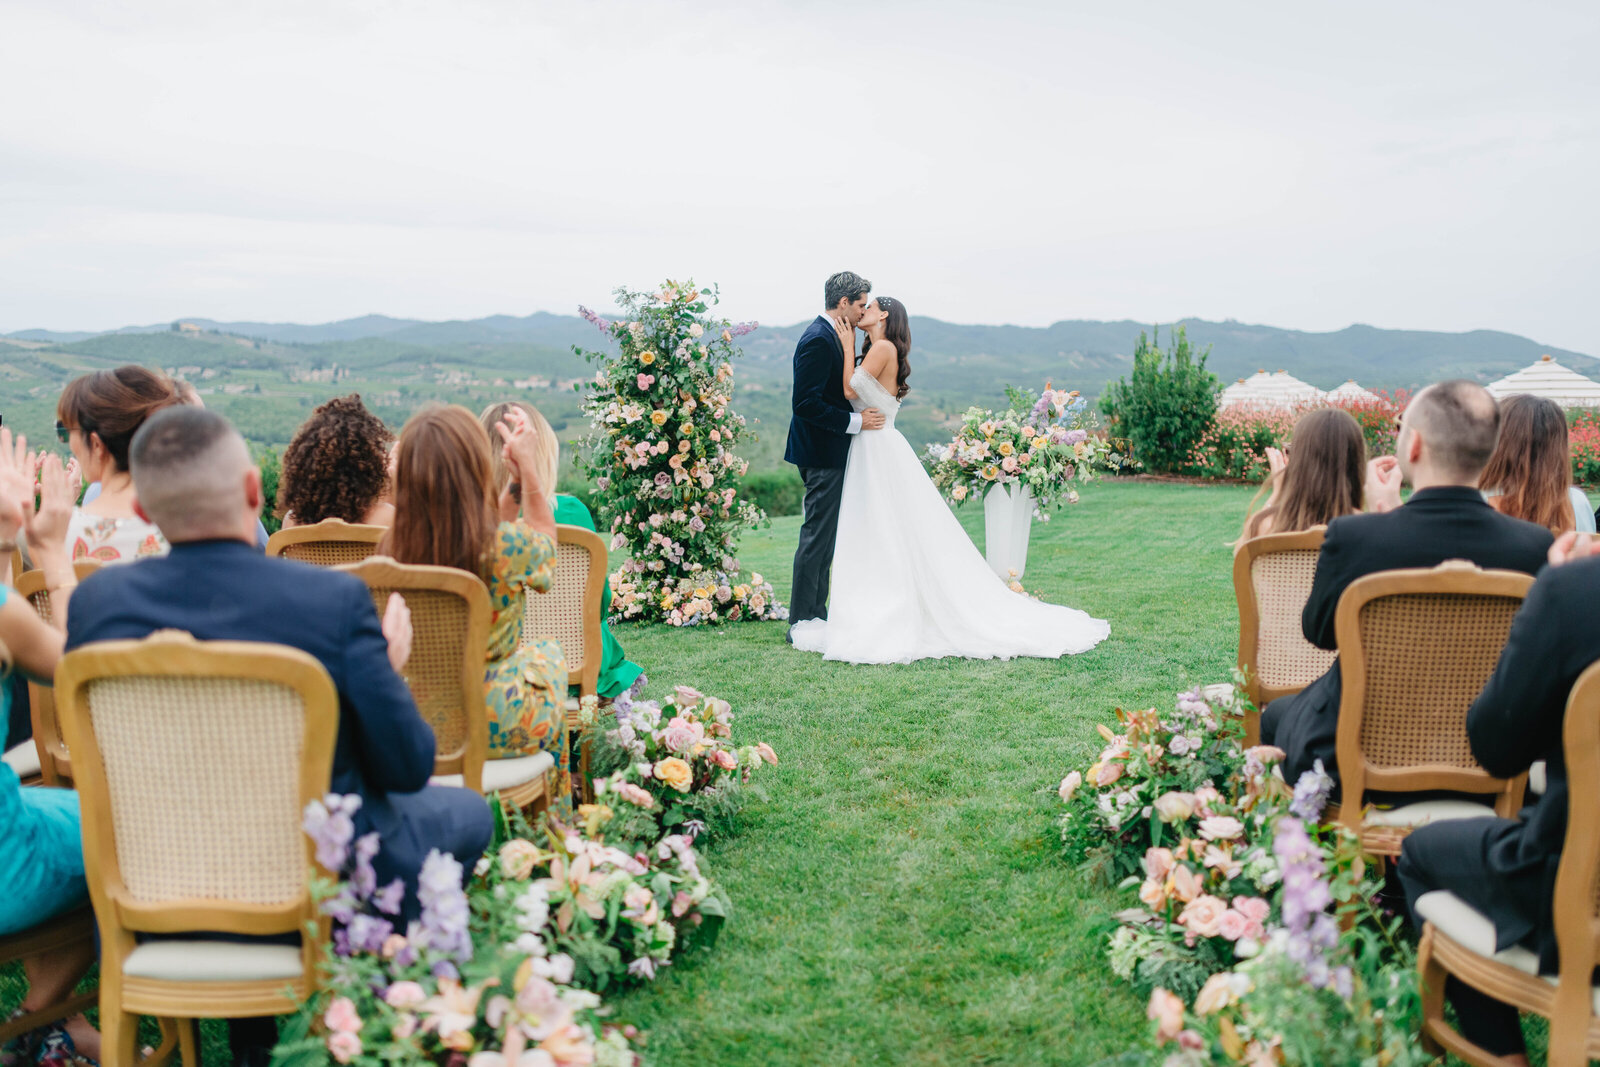 MorganeBallPhotography-Wedding-Tuscany-TheClubHouse-LovelyInstants-03-WeddingCeremony-atmosphere-lq-92-3998